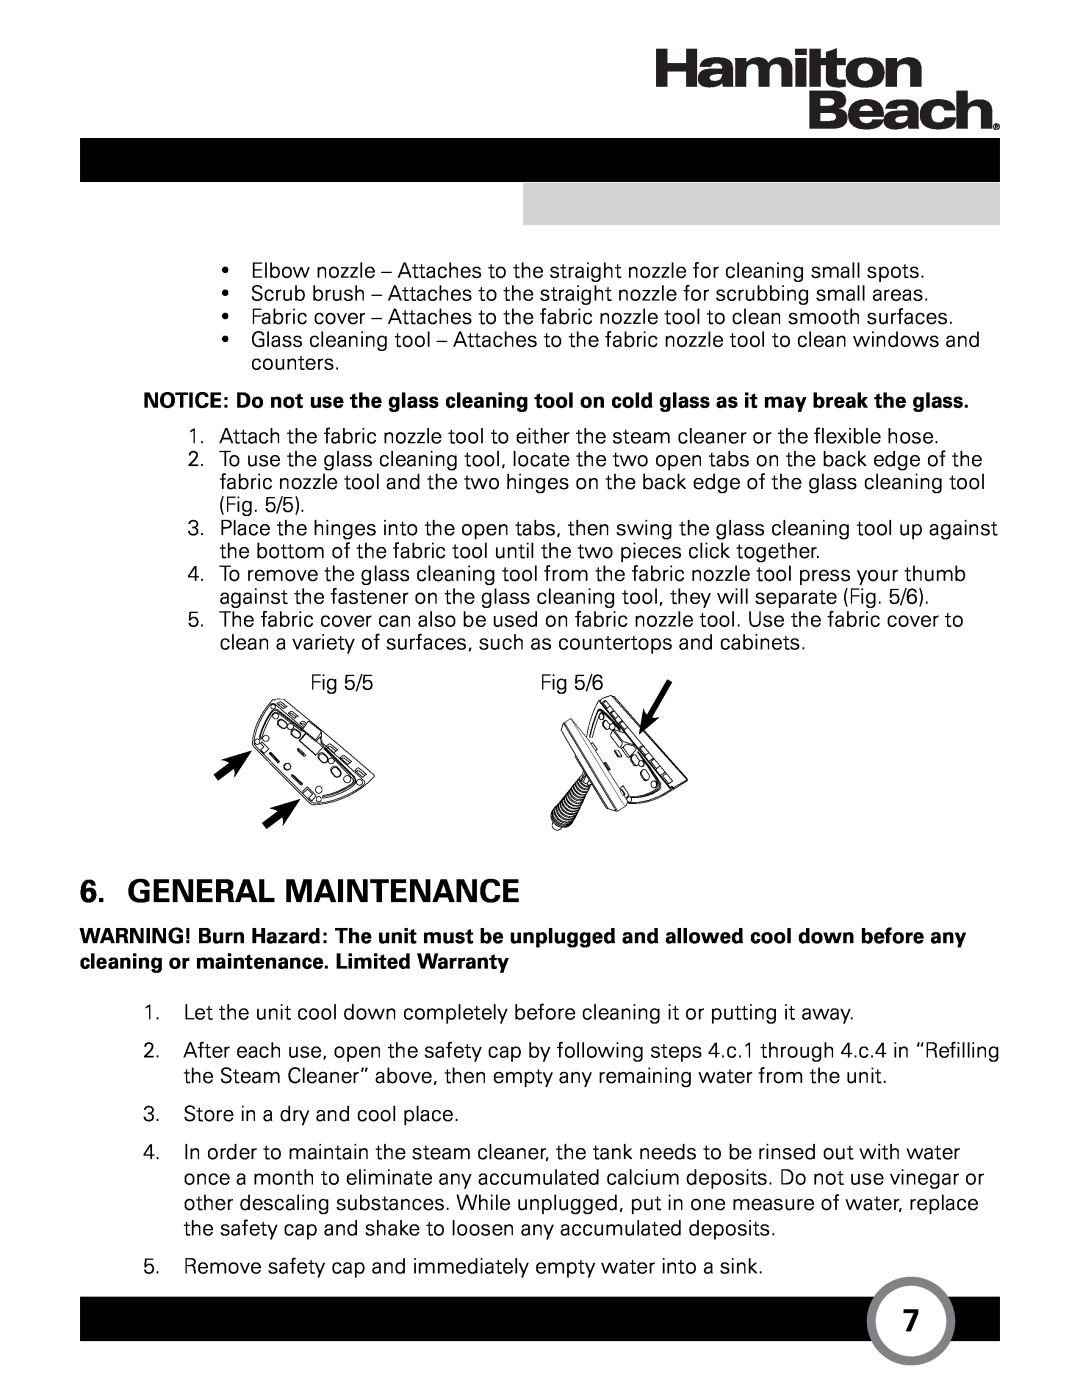 Hamilton Beach HB-165 owner manual General Maintenance 